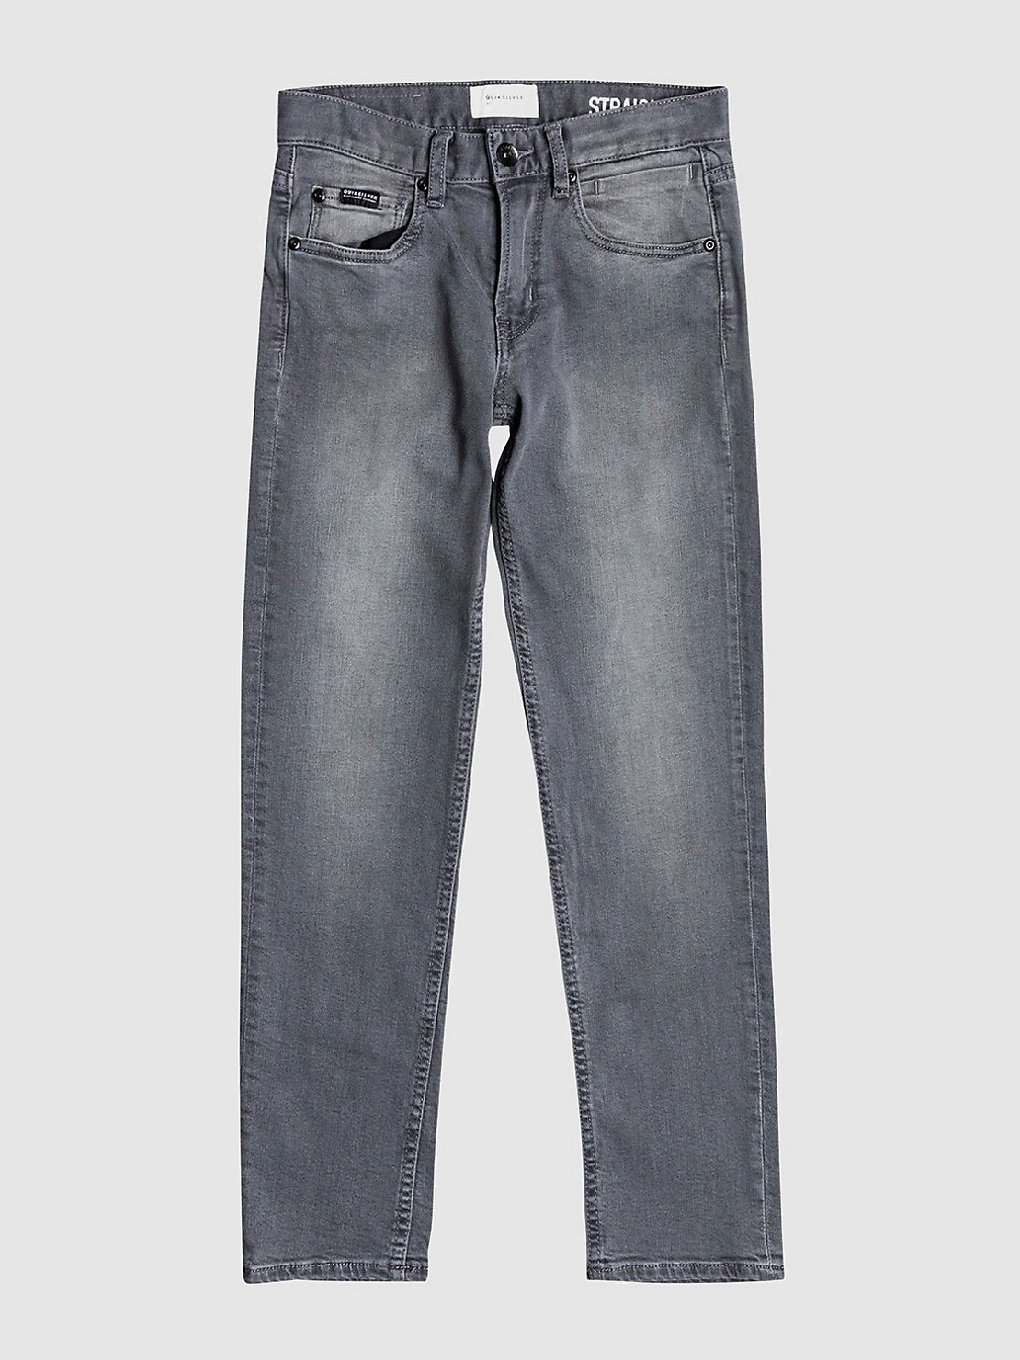 quiksilver modern wave pants grey used